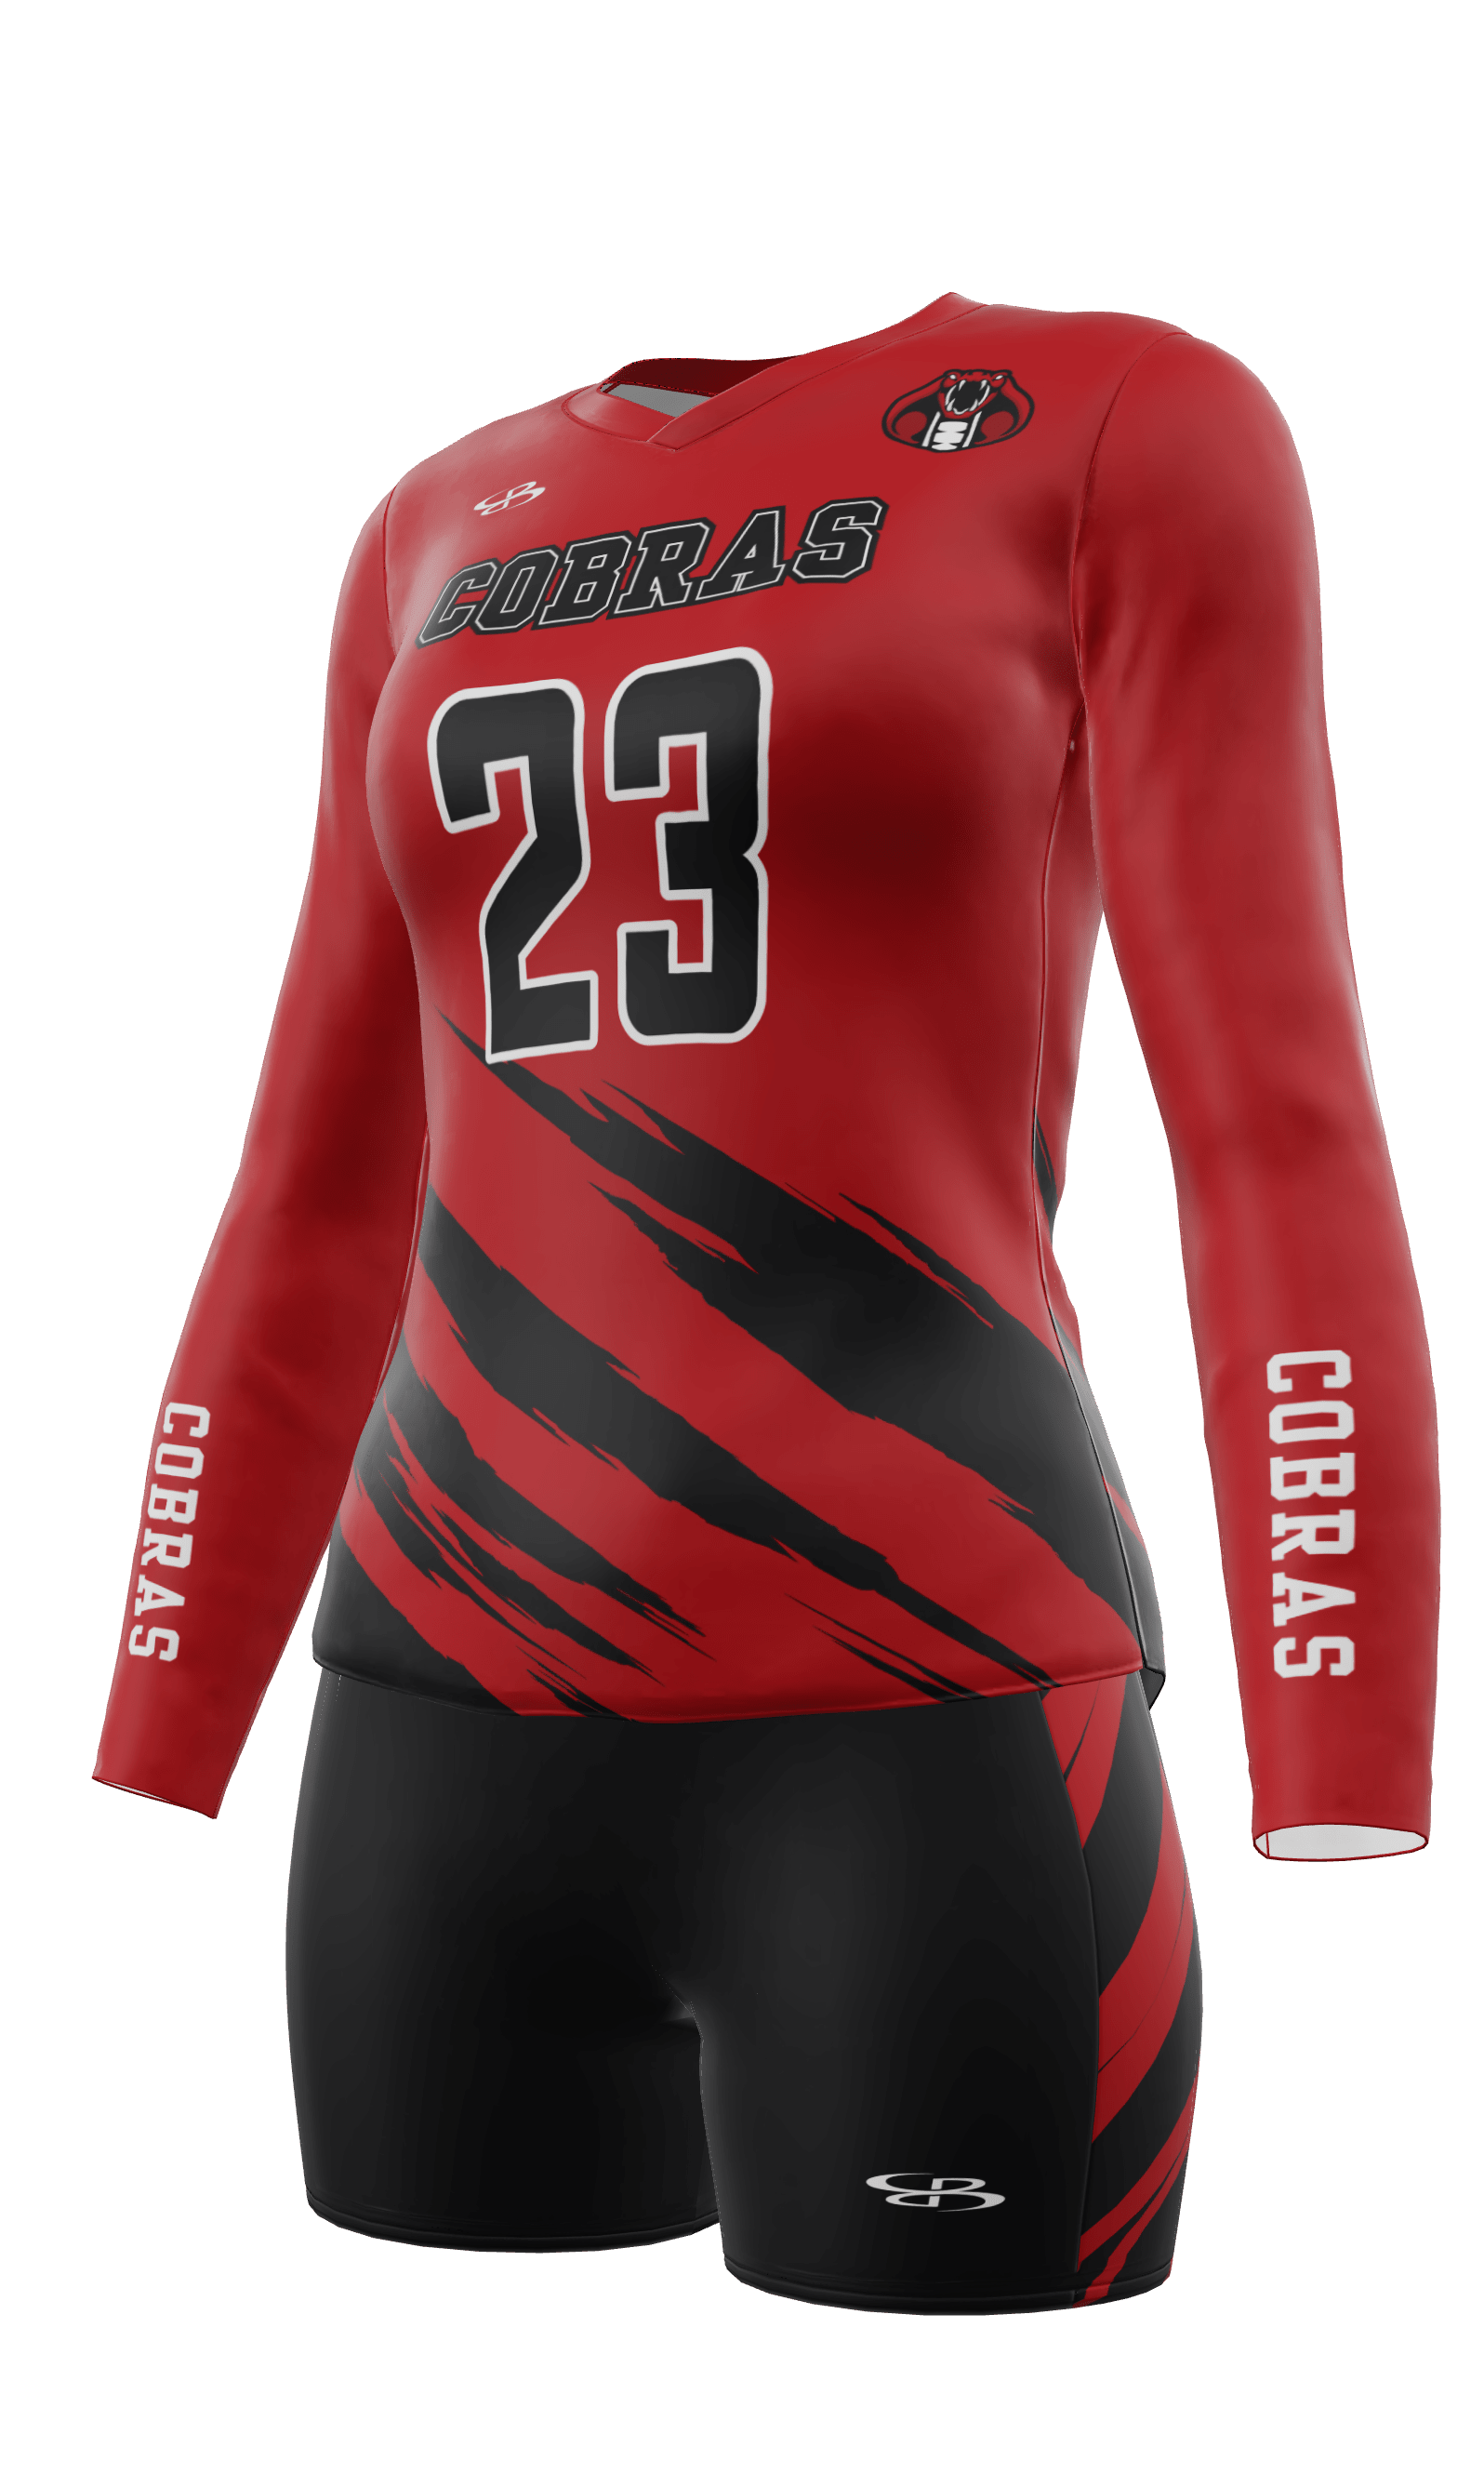 Custom Women's and Girls' Volleyball Uniforms & Equipment | Boombah